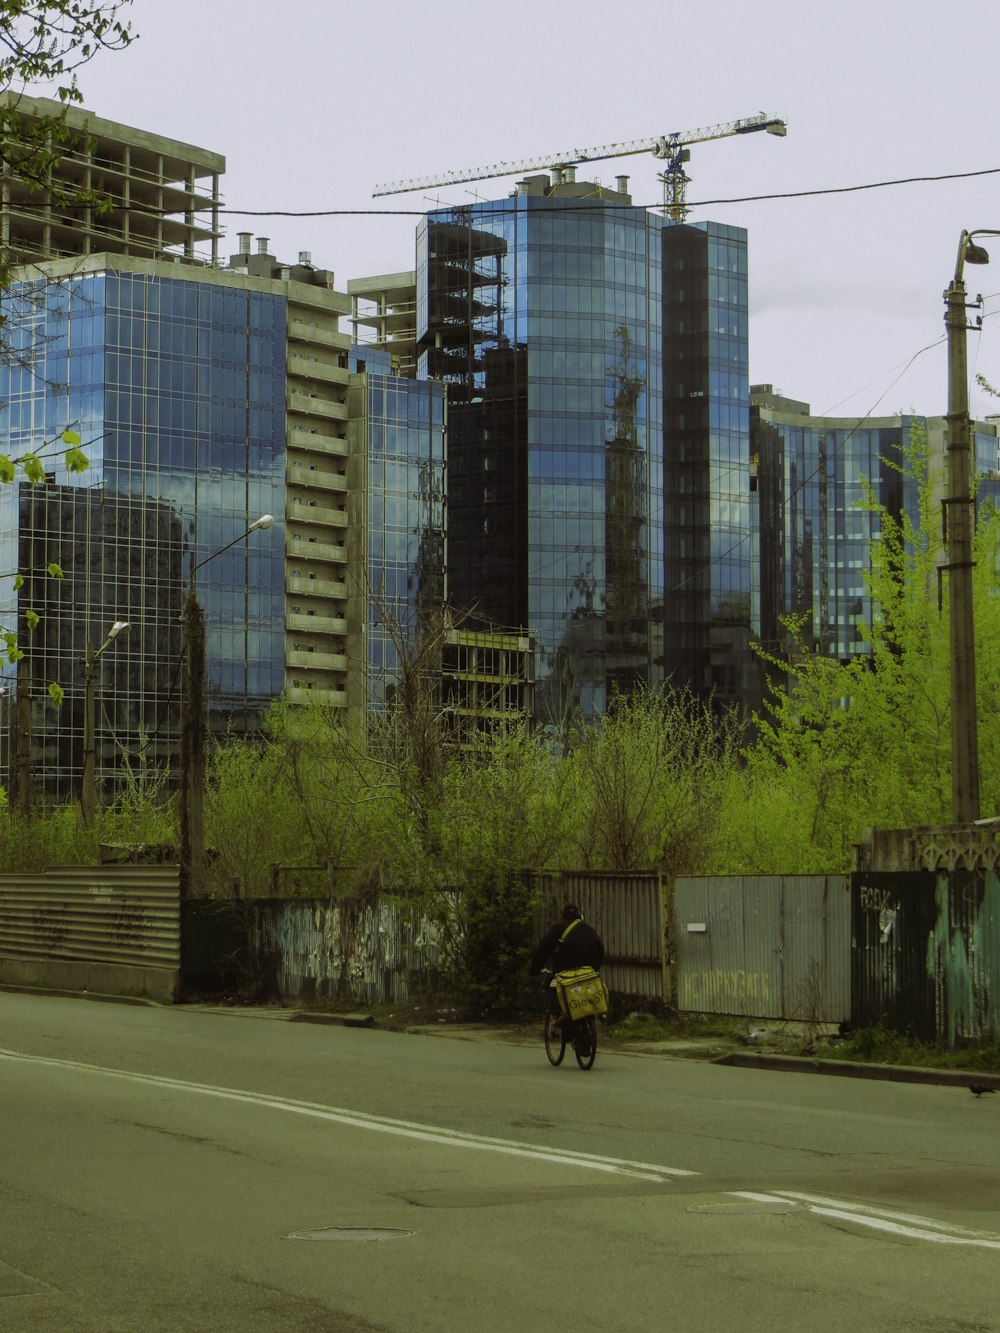 a man riding a bike down a street next to tall buildings